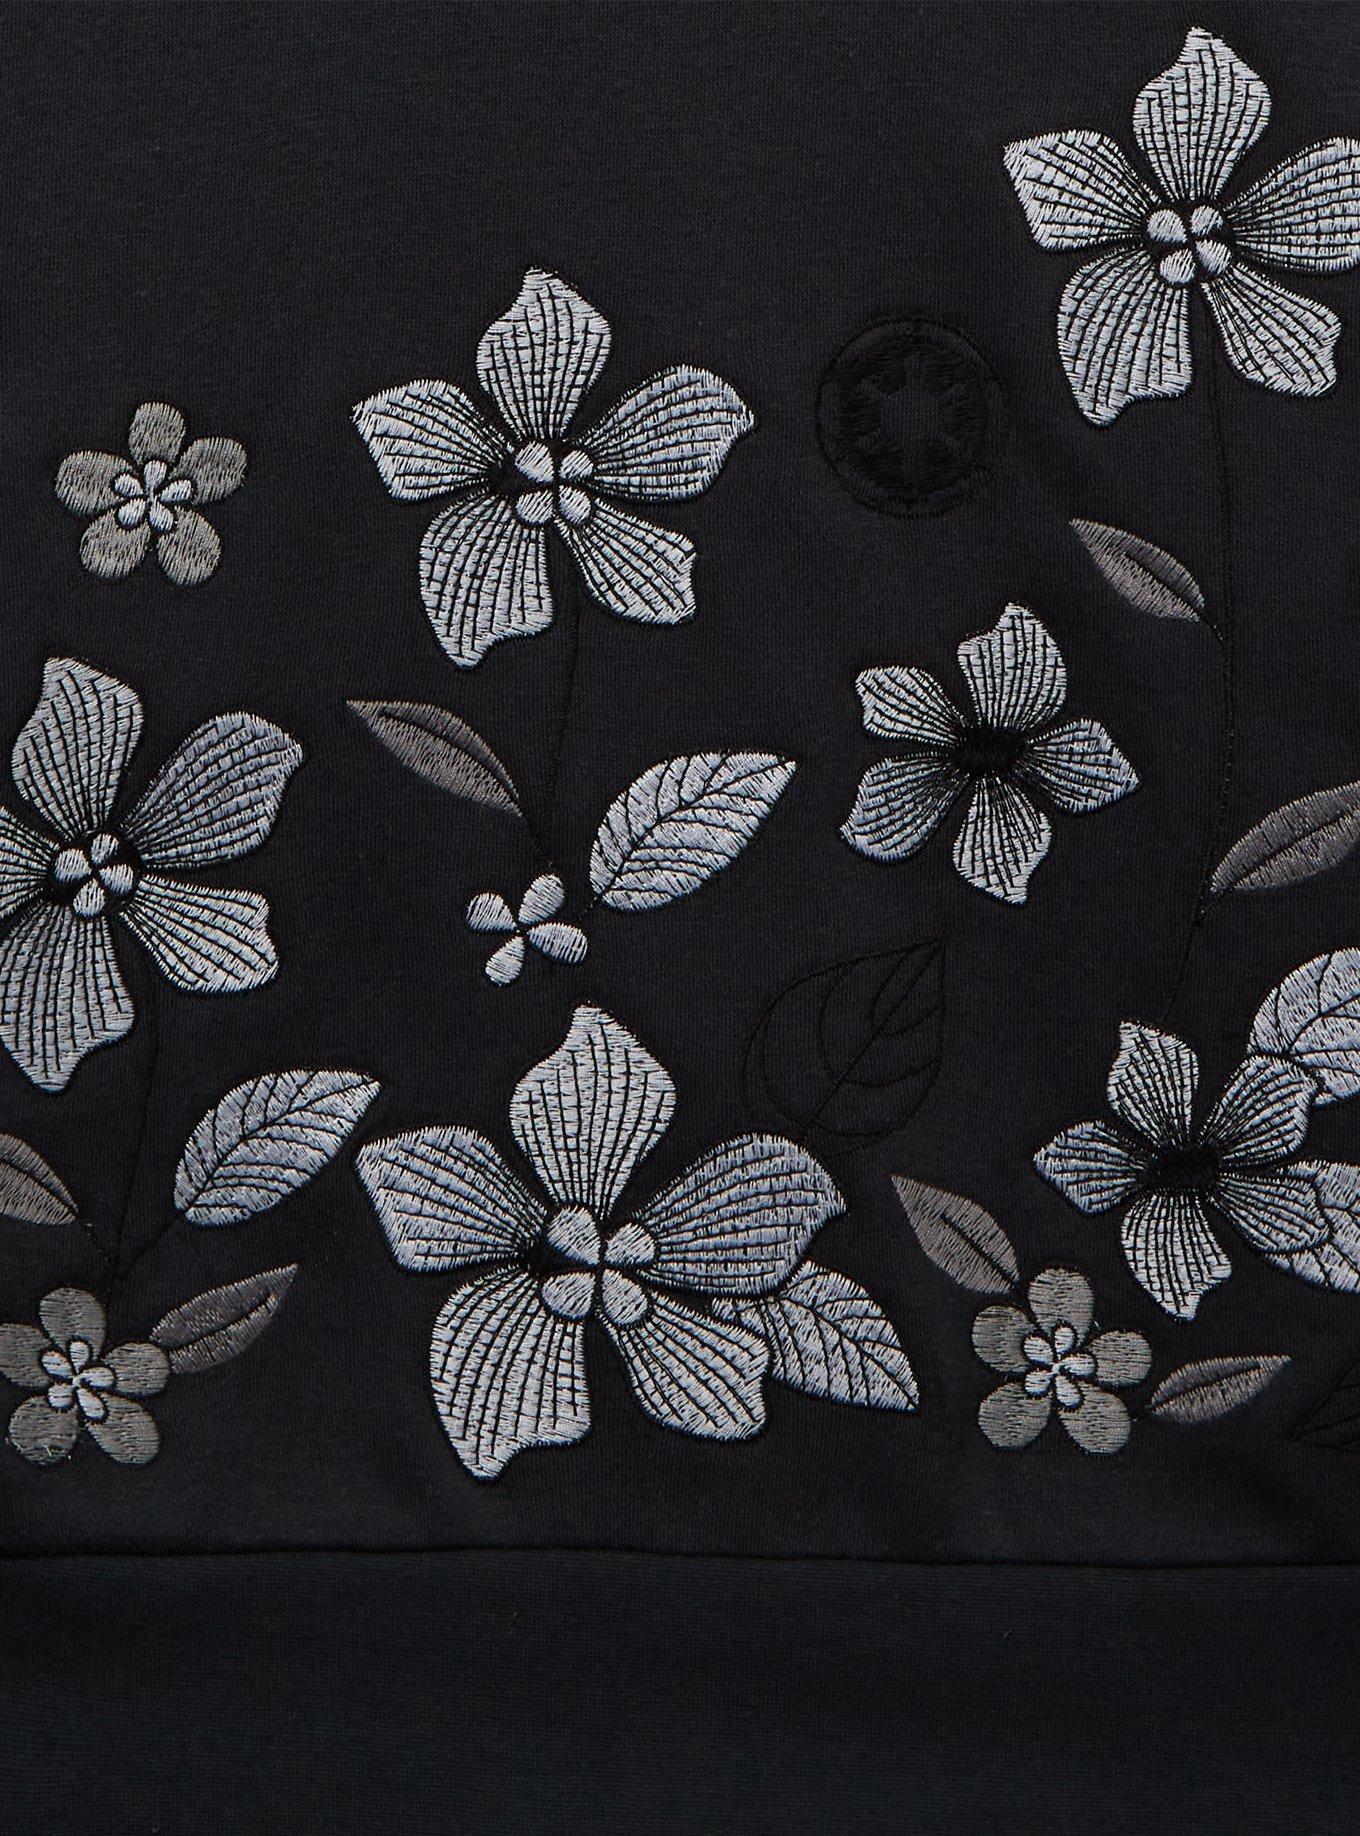 Our Universe Star Wars Sith Floral Embroidered Sweatshirt, BLACK BLACK WHITE, alternate